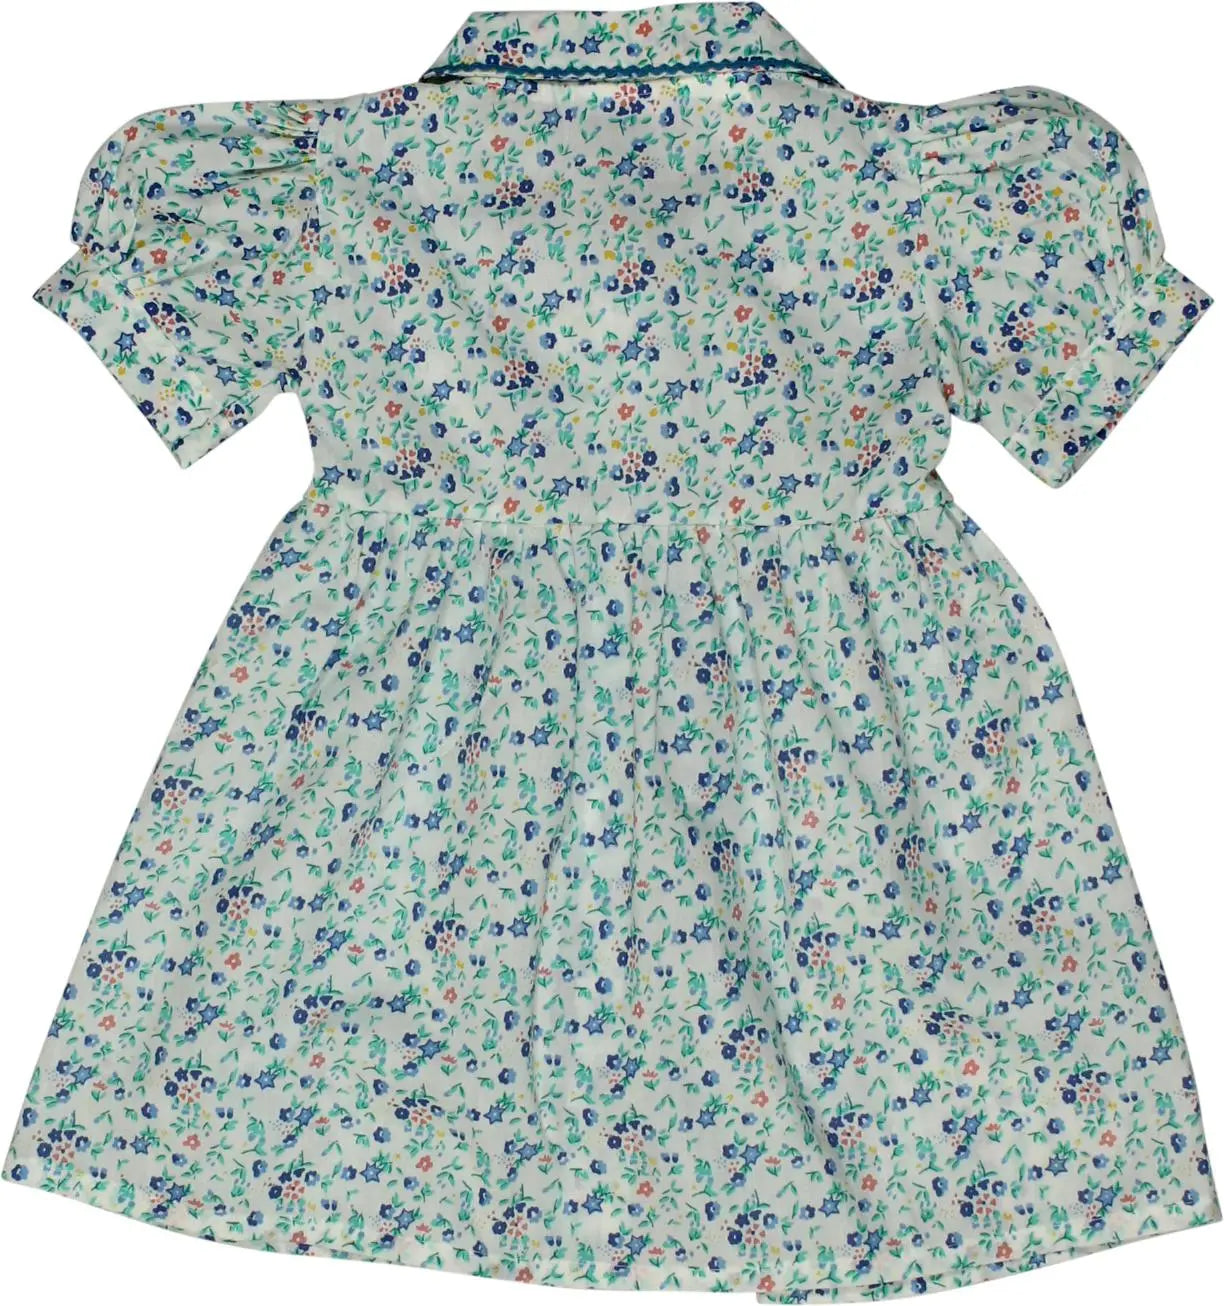 Boutchou - Dress- ThriftTale.com - Vintage and second handclothing